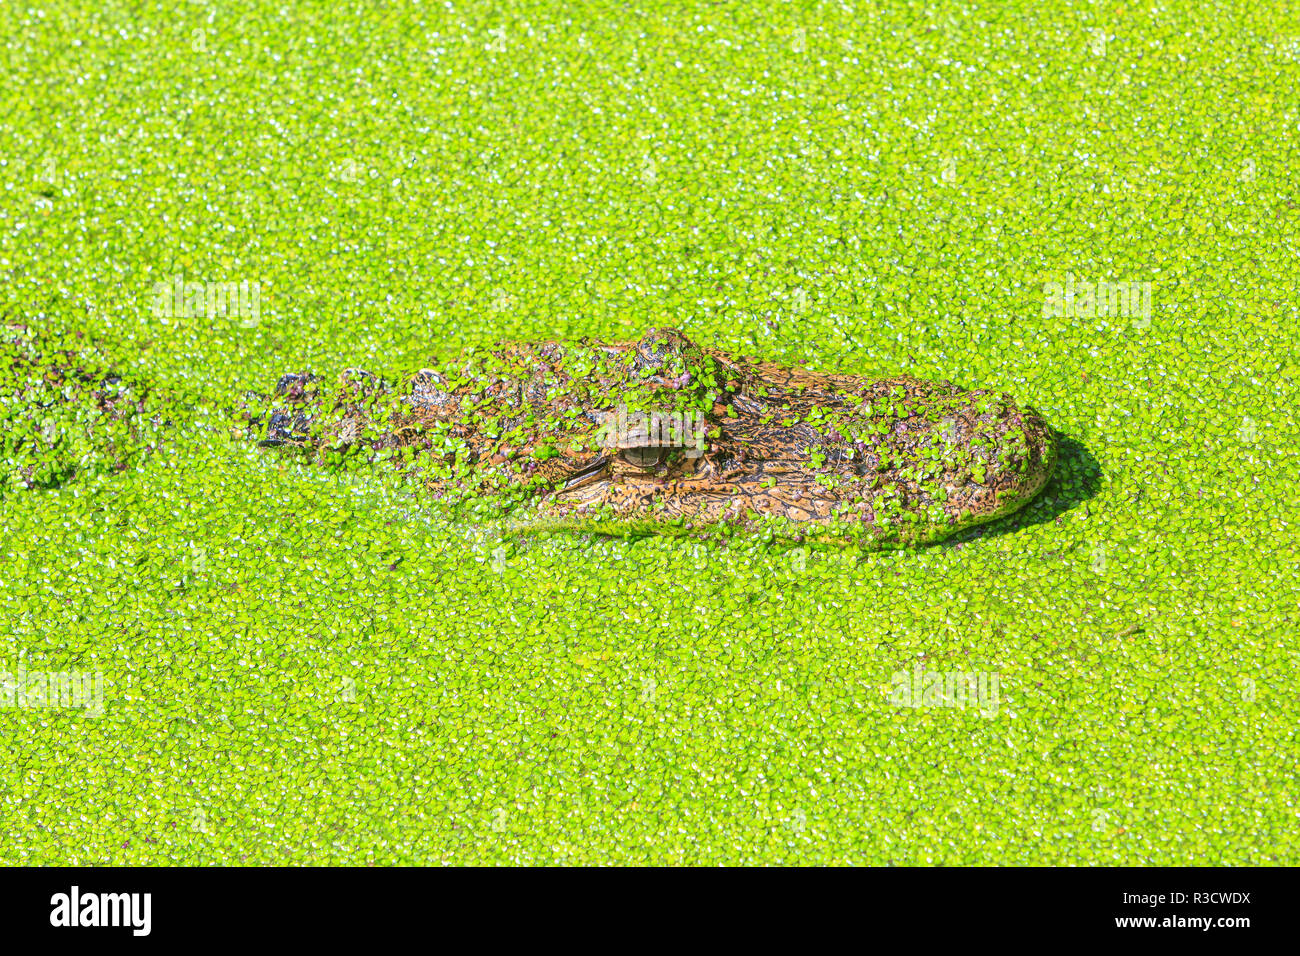 Alligator nearly submerged in duckweed. New Orleans, Louisiana, USA Stock Photo